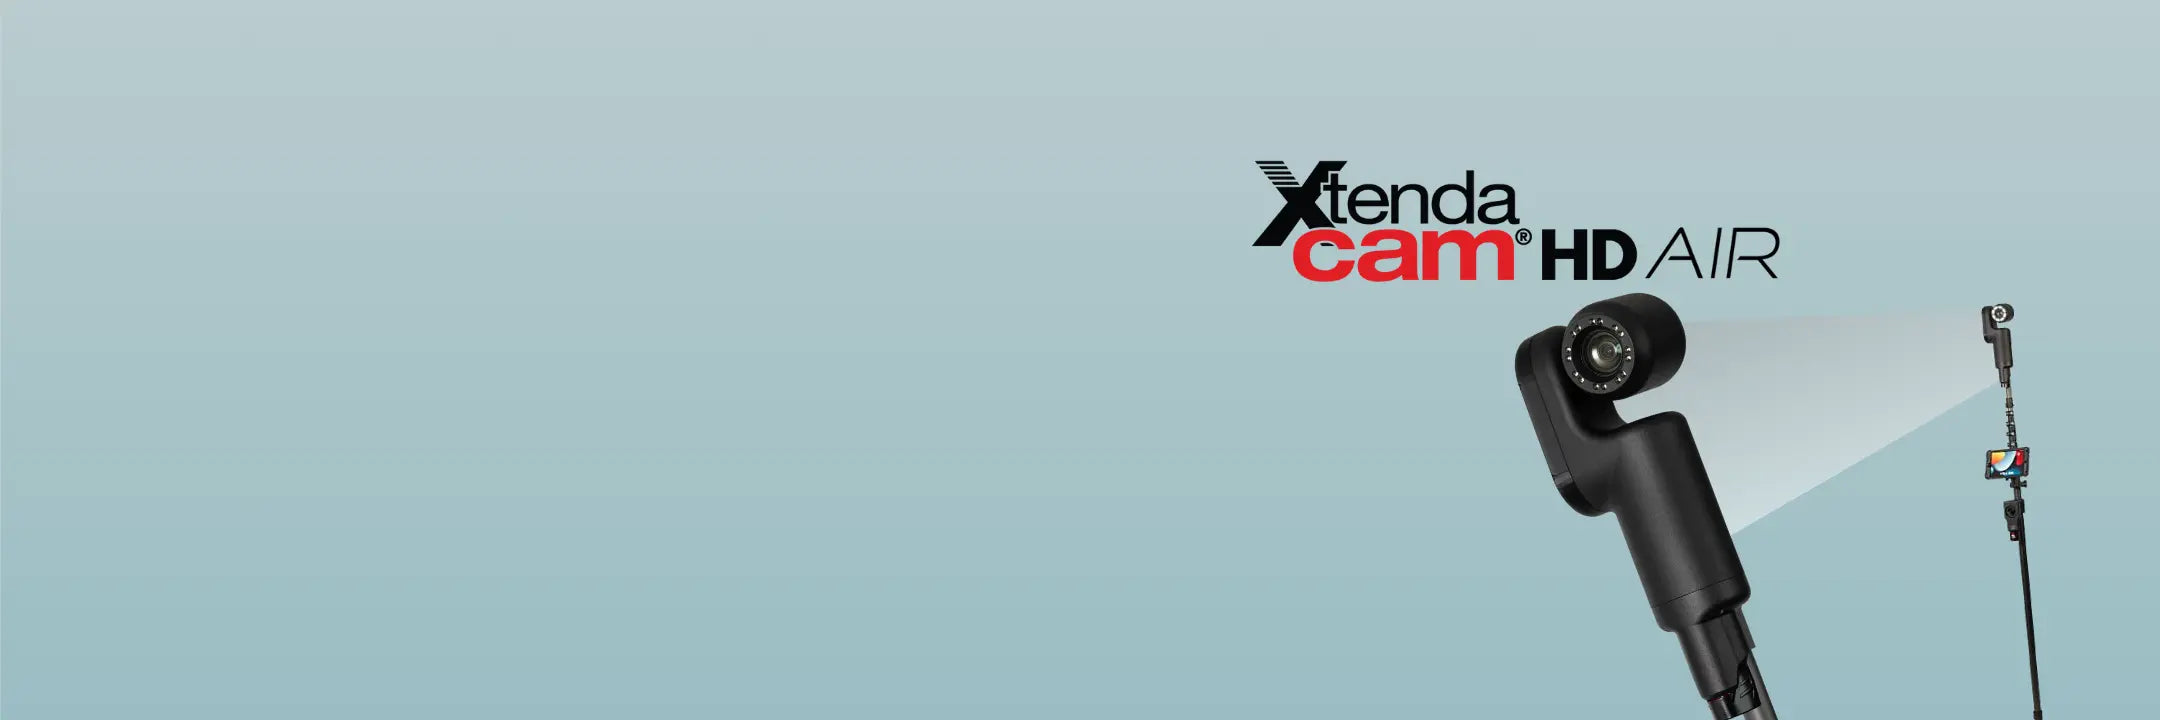 XtendaCam HD AIR pole camera for visual inspection- InterTest